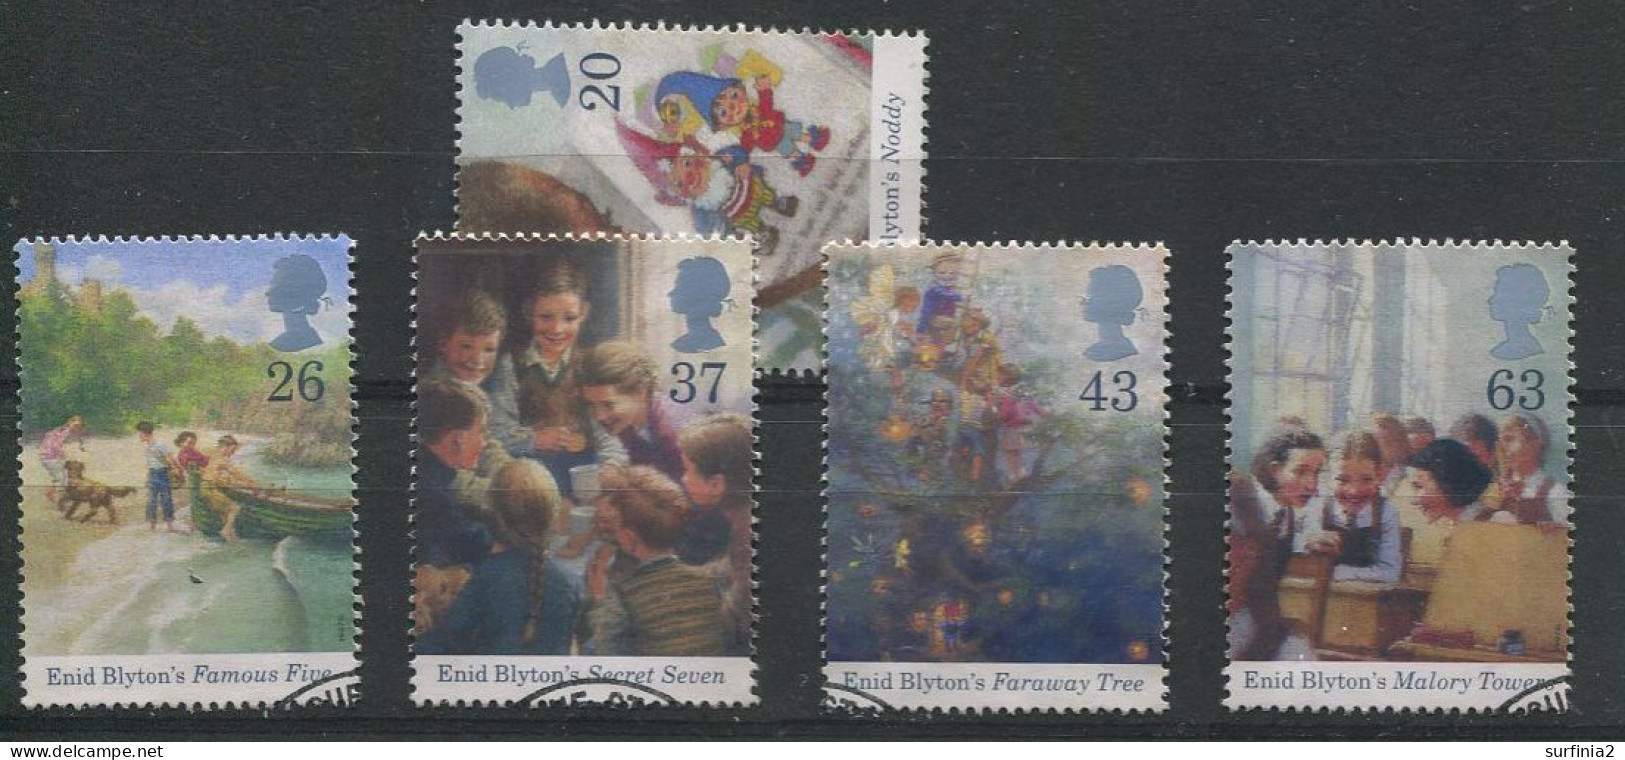 STAMPS - 1997 ENID BLYTON SET VFU - Used Stamps